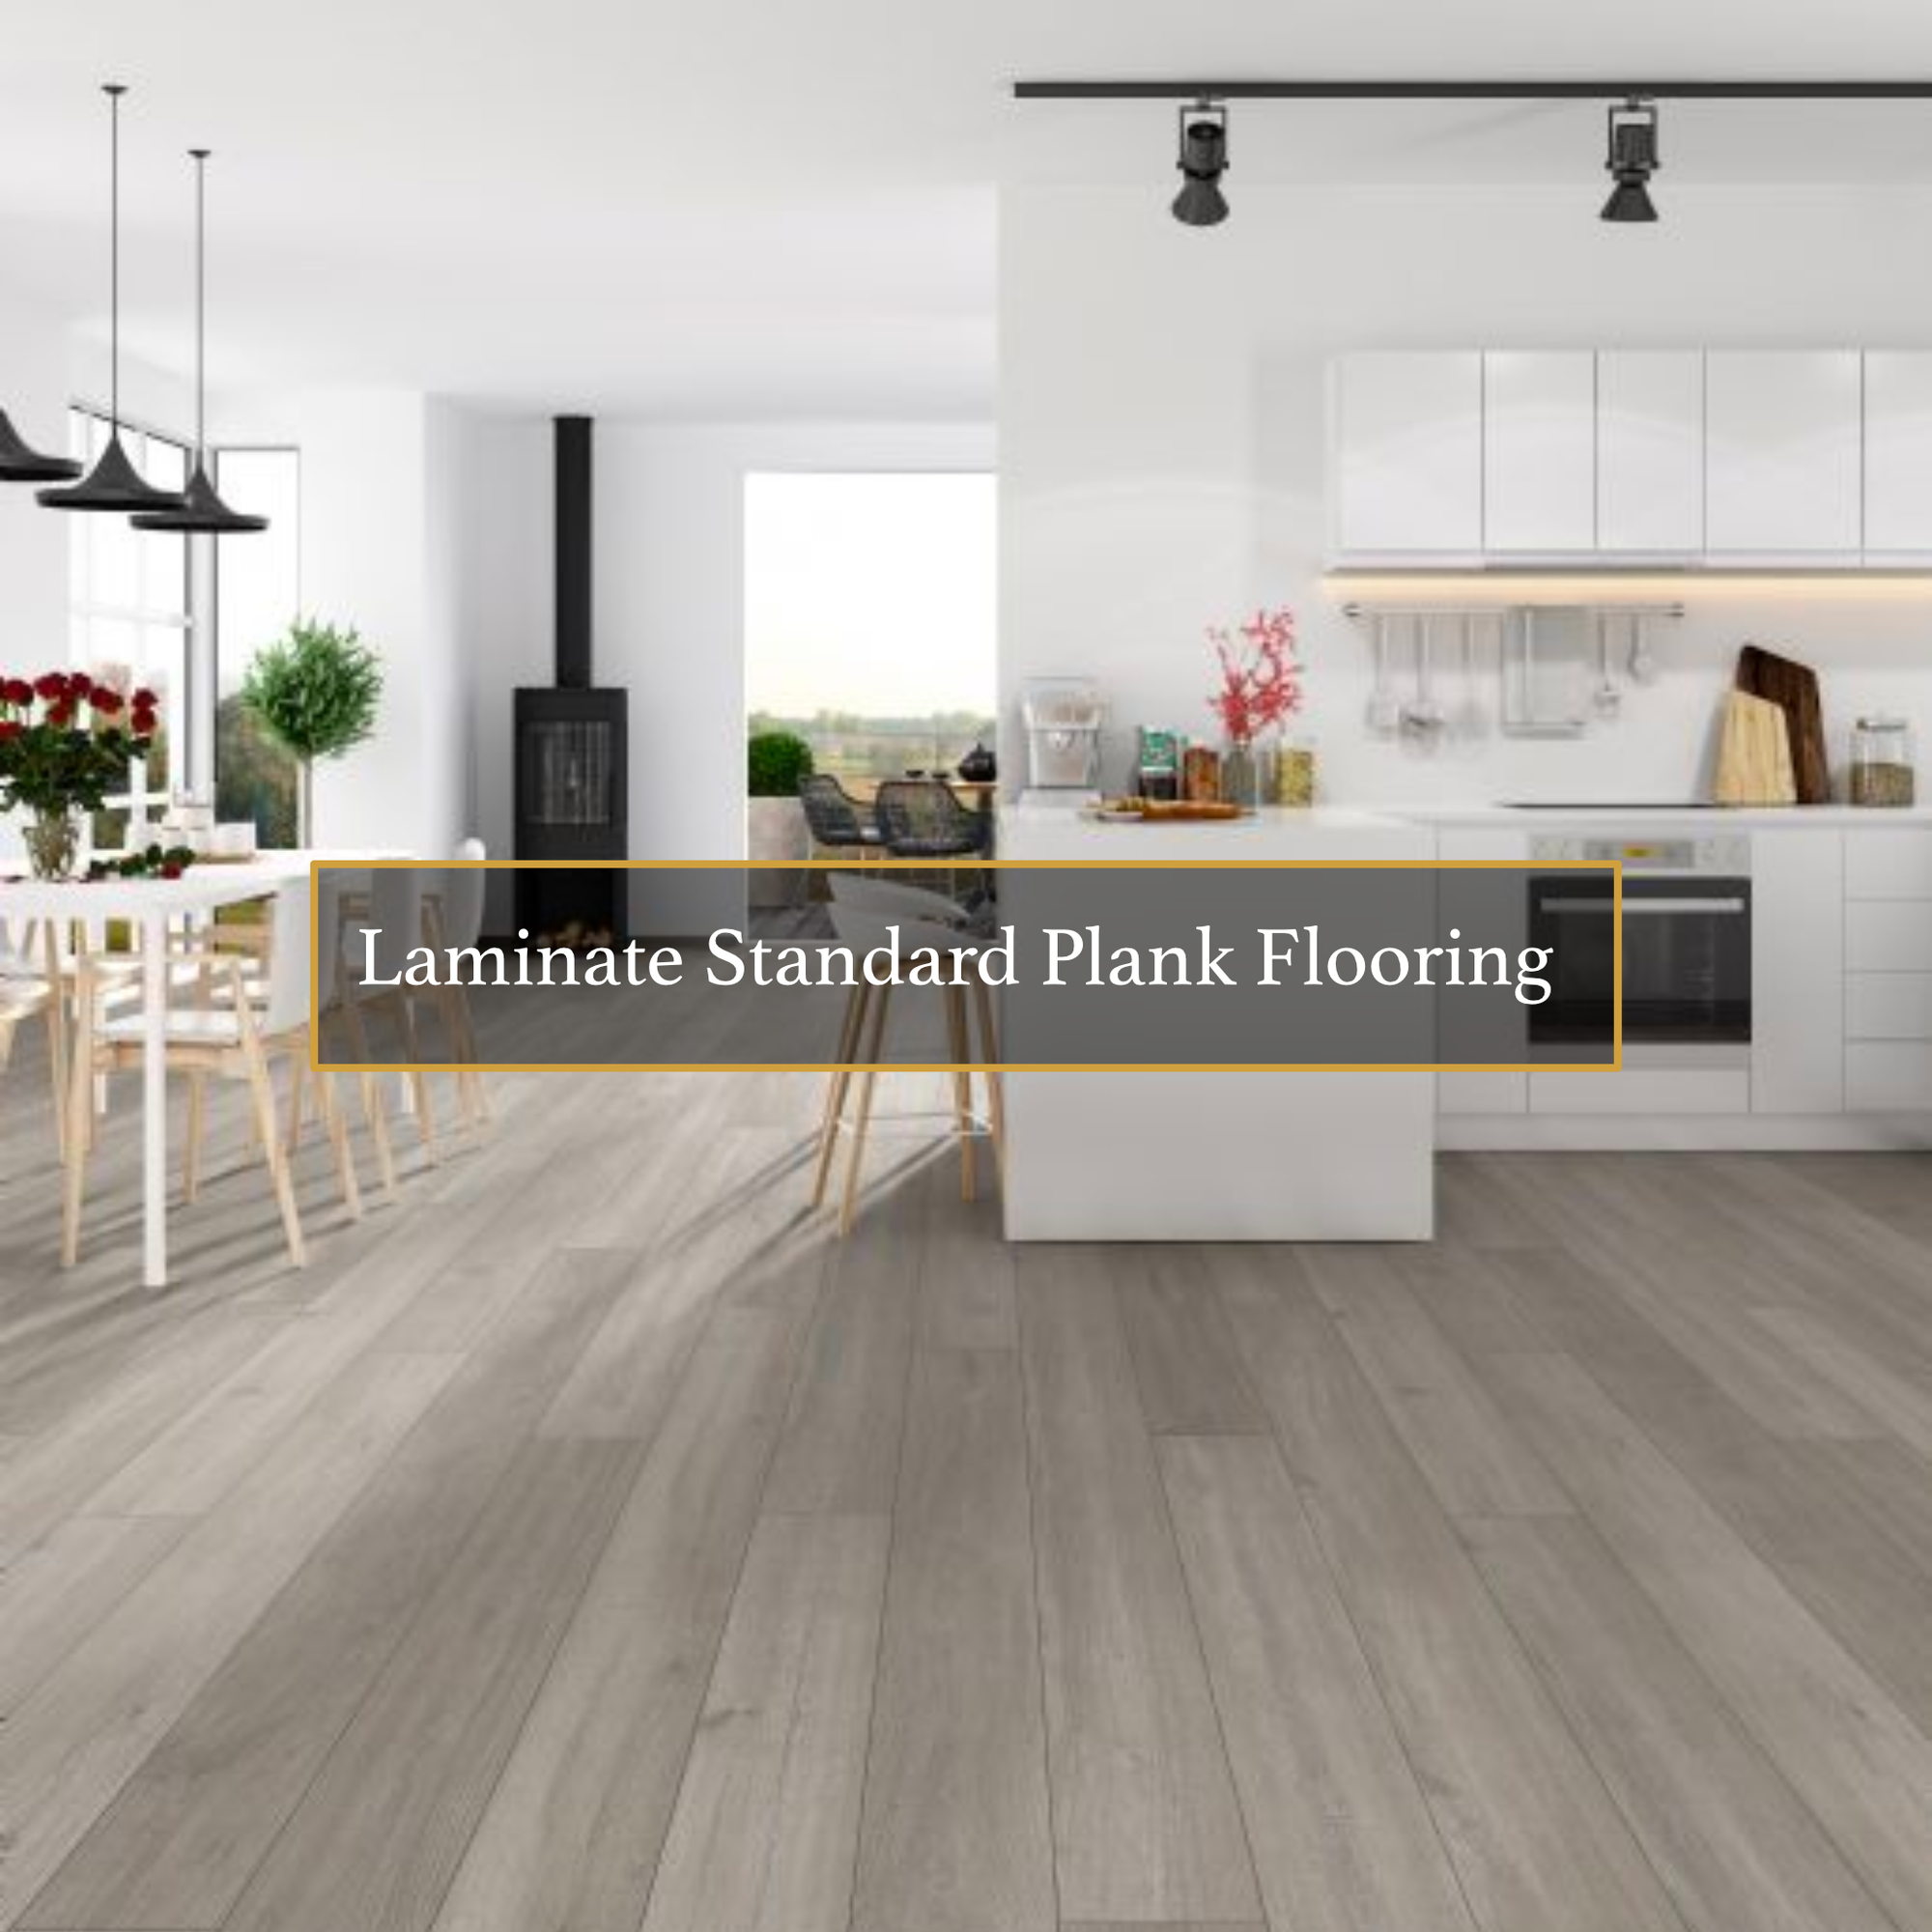 Laminate Standard Plank Flooring